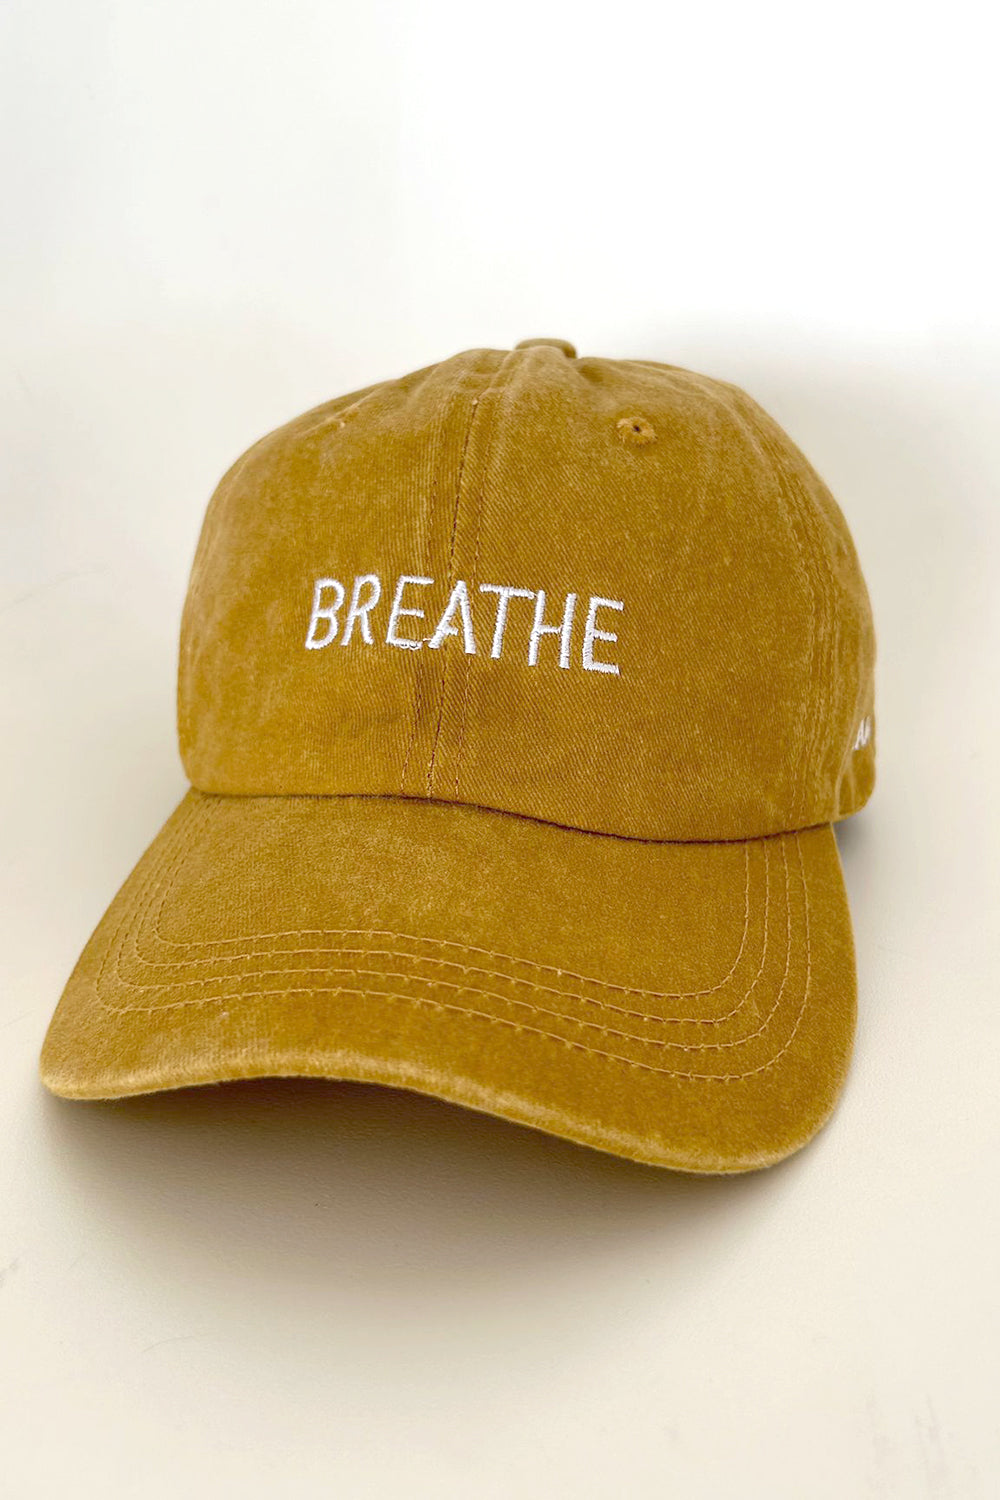 BREATHE with TAMU cap